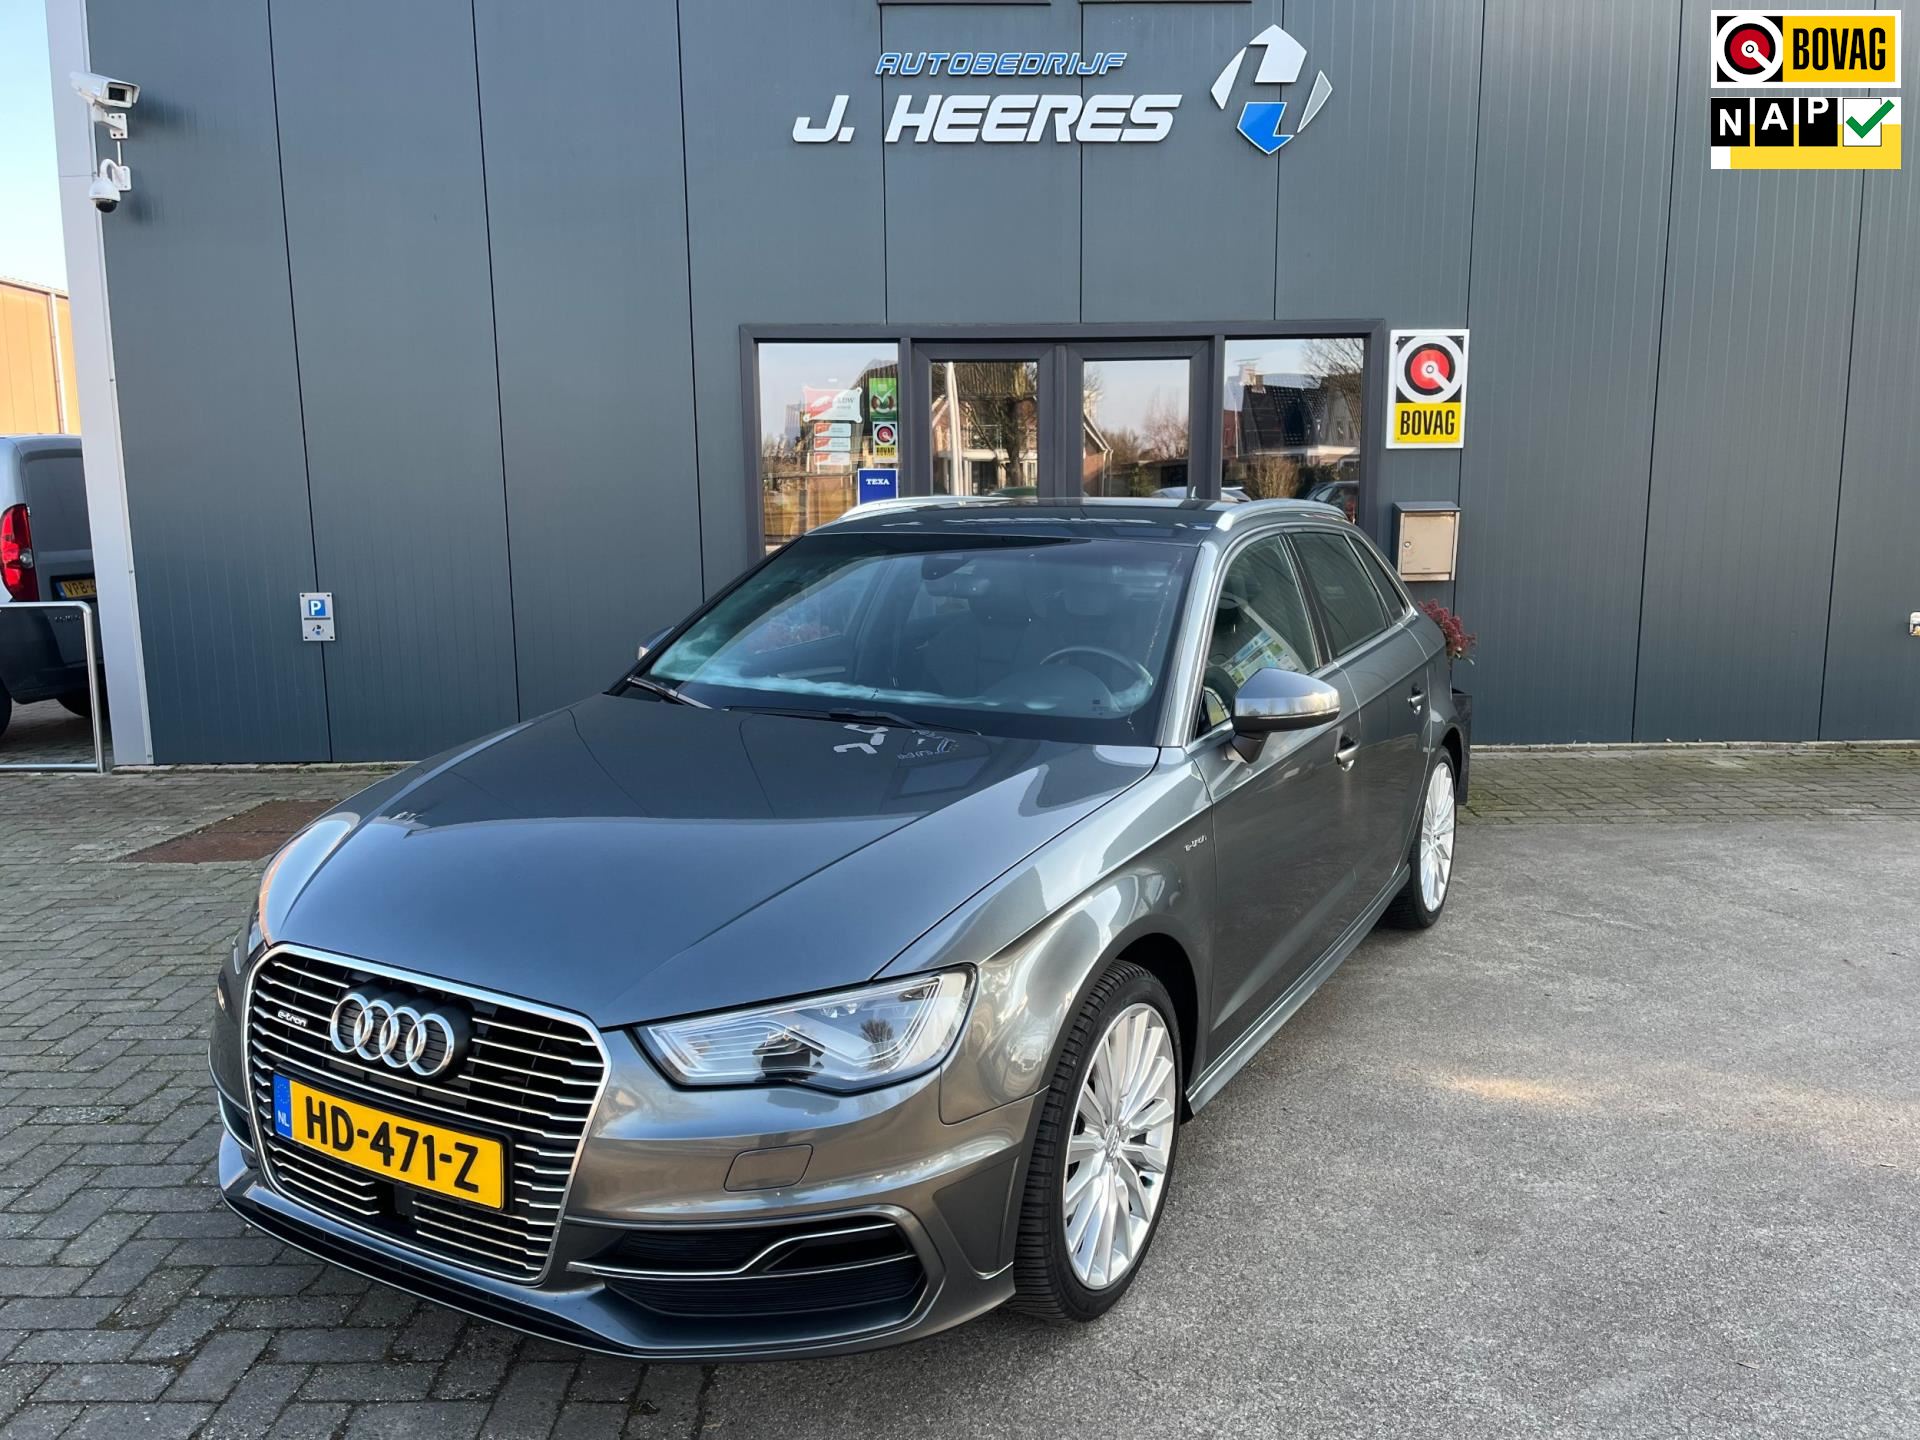 Audi A3 Sportback occasion - Autobedrijf J Heeres